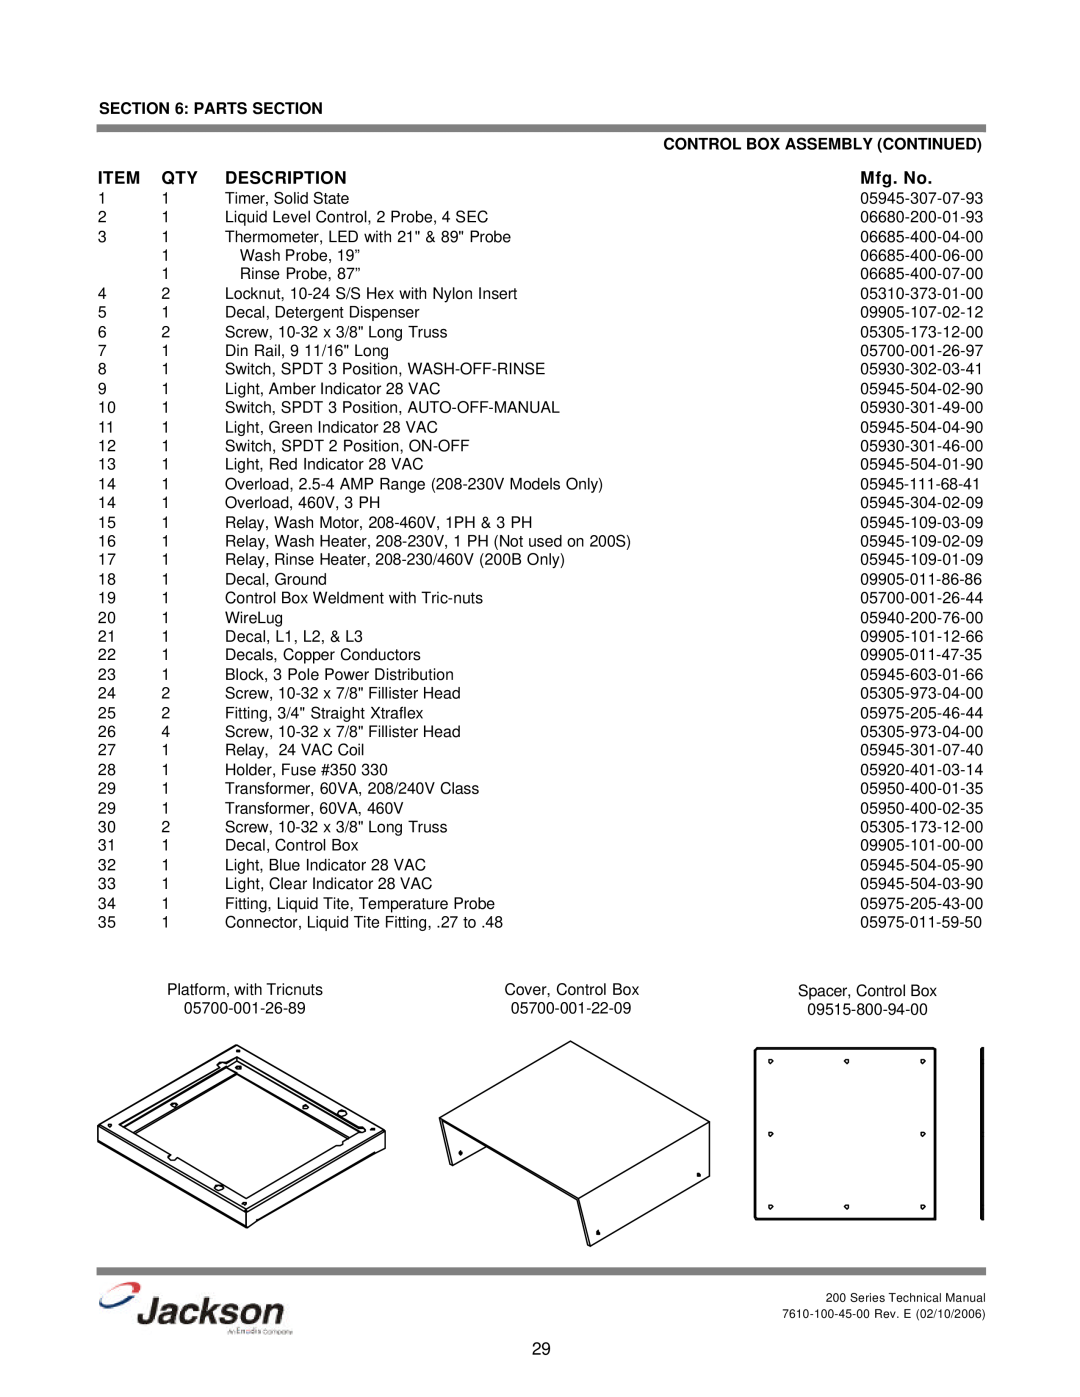 Jackson 200LT, 200S, 200B technical manual Description, Mfg. No, Parts Section, Control Box Assembly Continued 